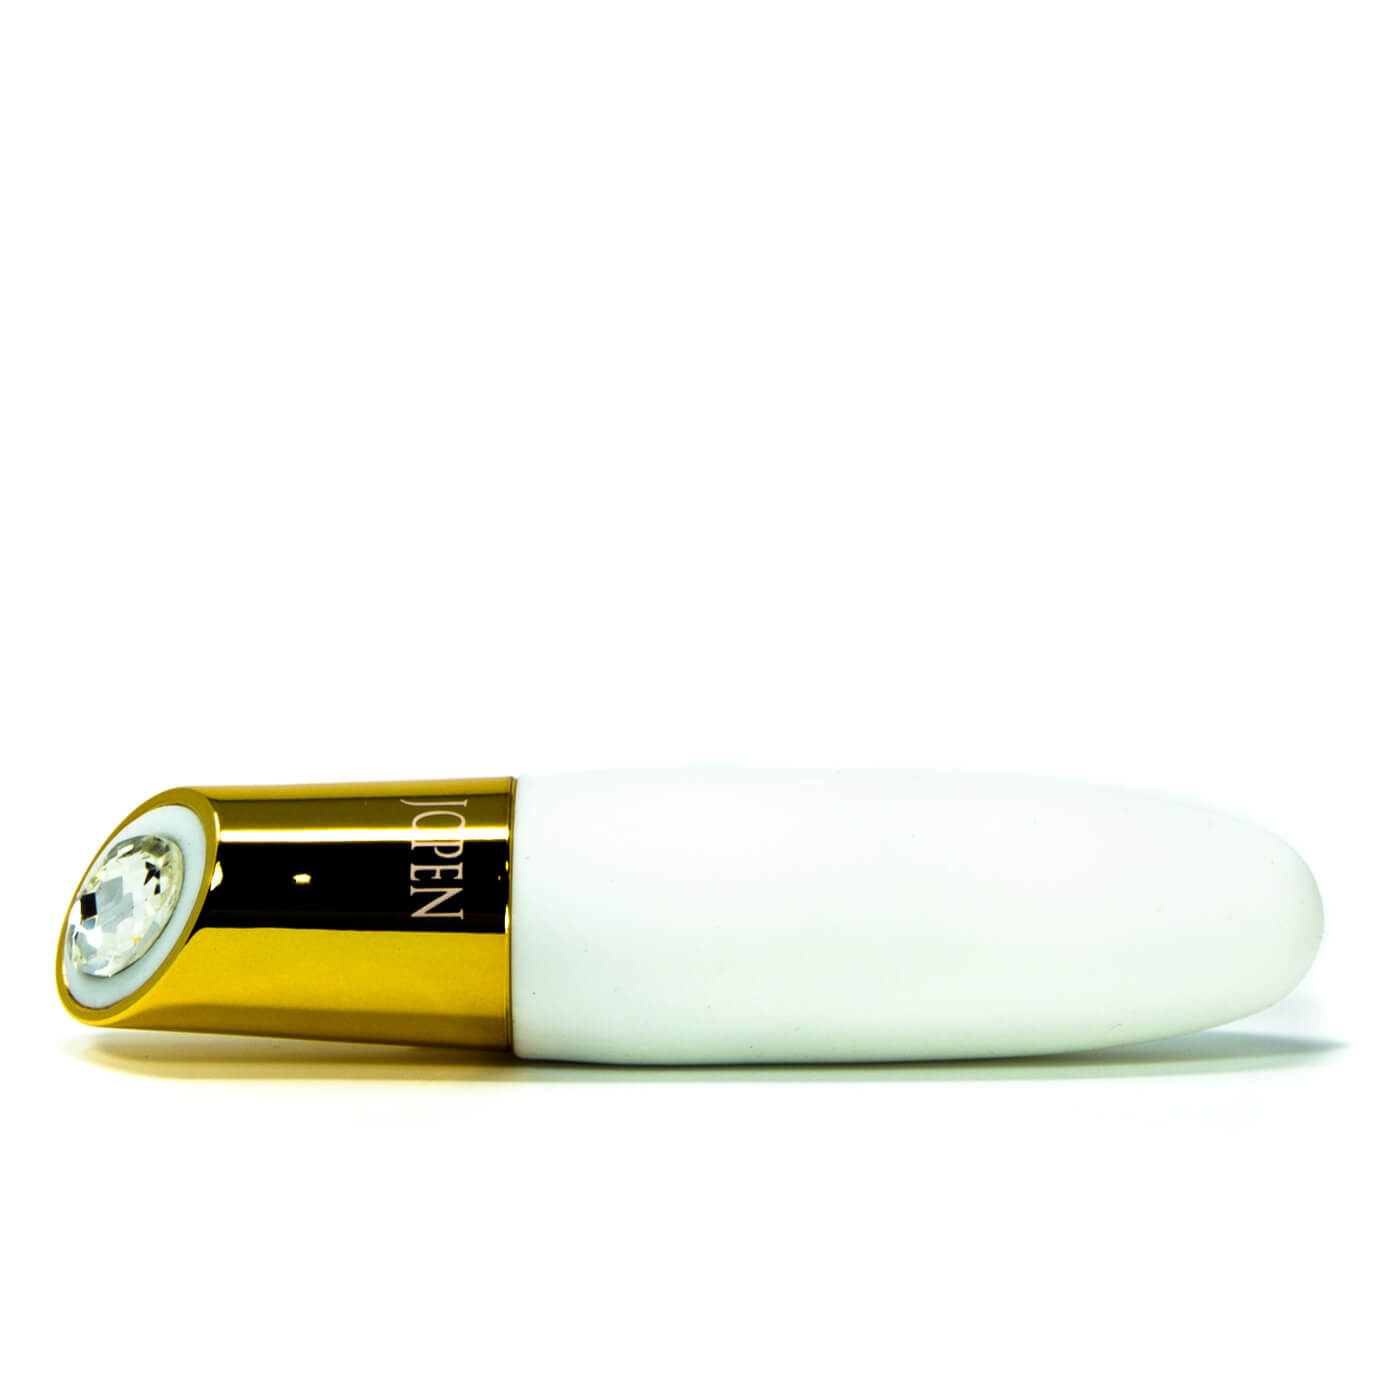 Jopen Callie Mini Wand 7 Function Waterproof USB Rechargeable Bullet Vibrator